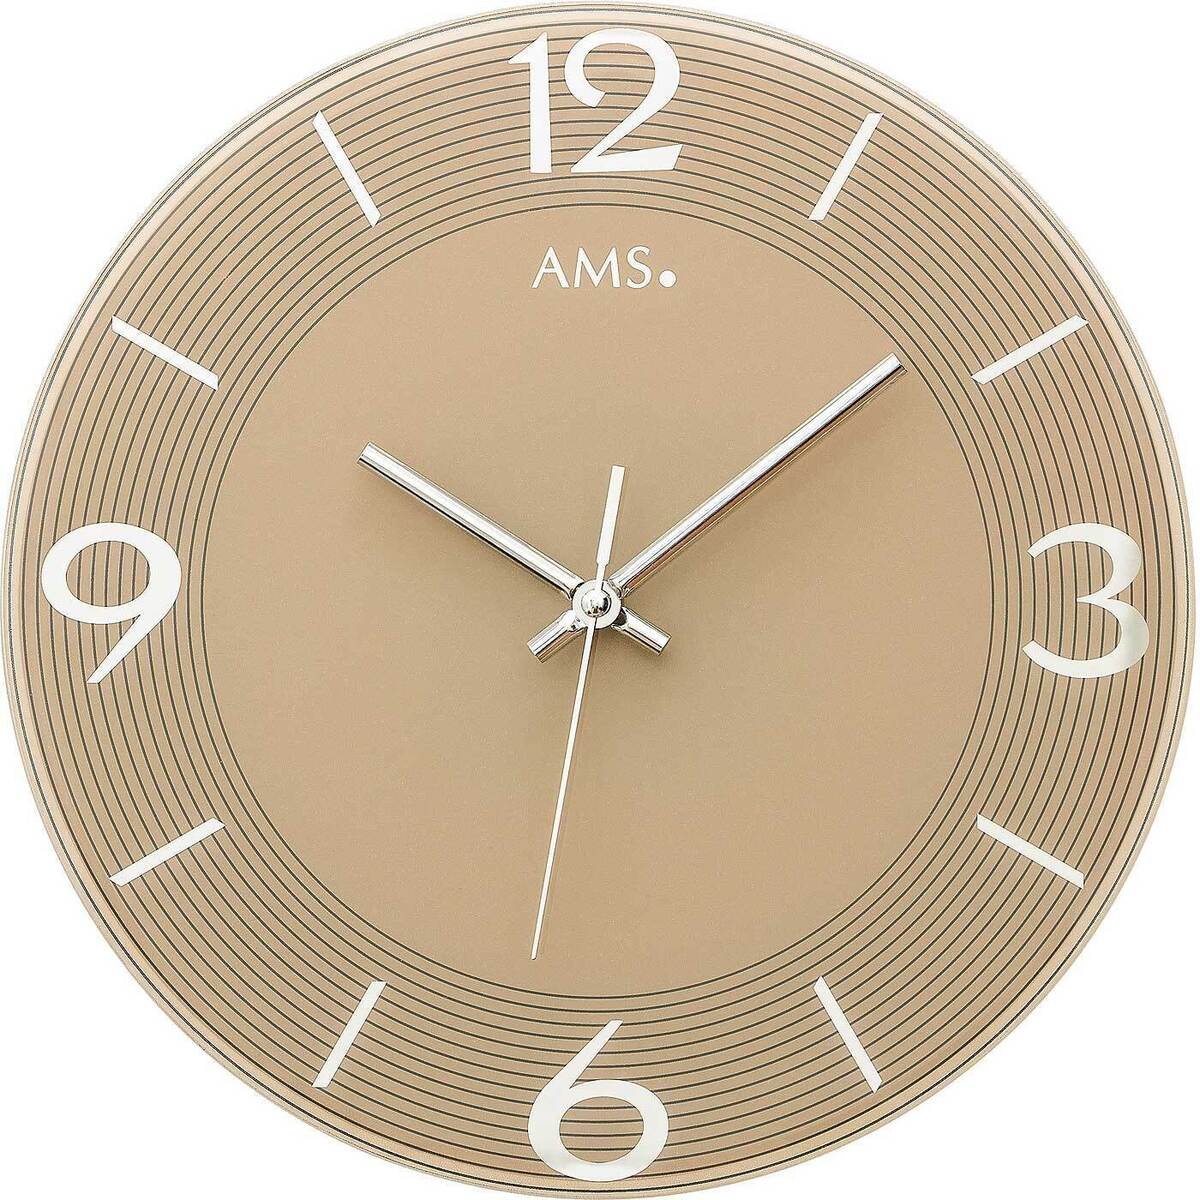 Jack & Jones Horloges Ams 9572, Quartz, Or, Analogique, Modern Doré